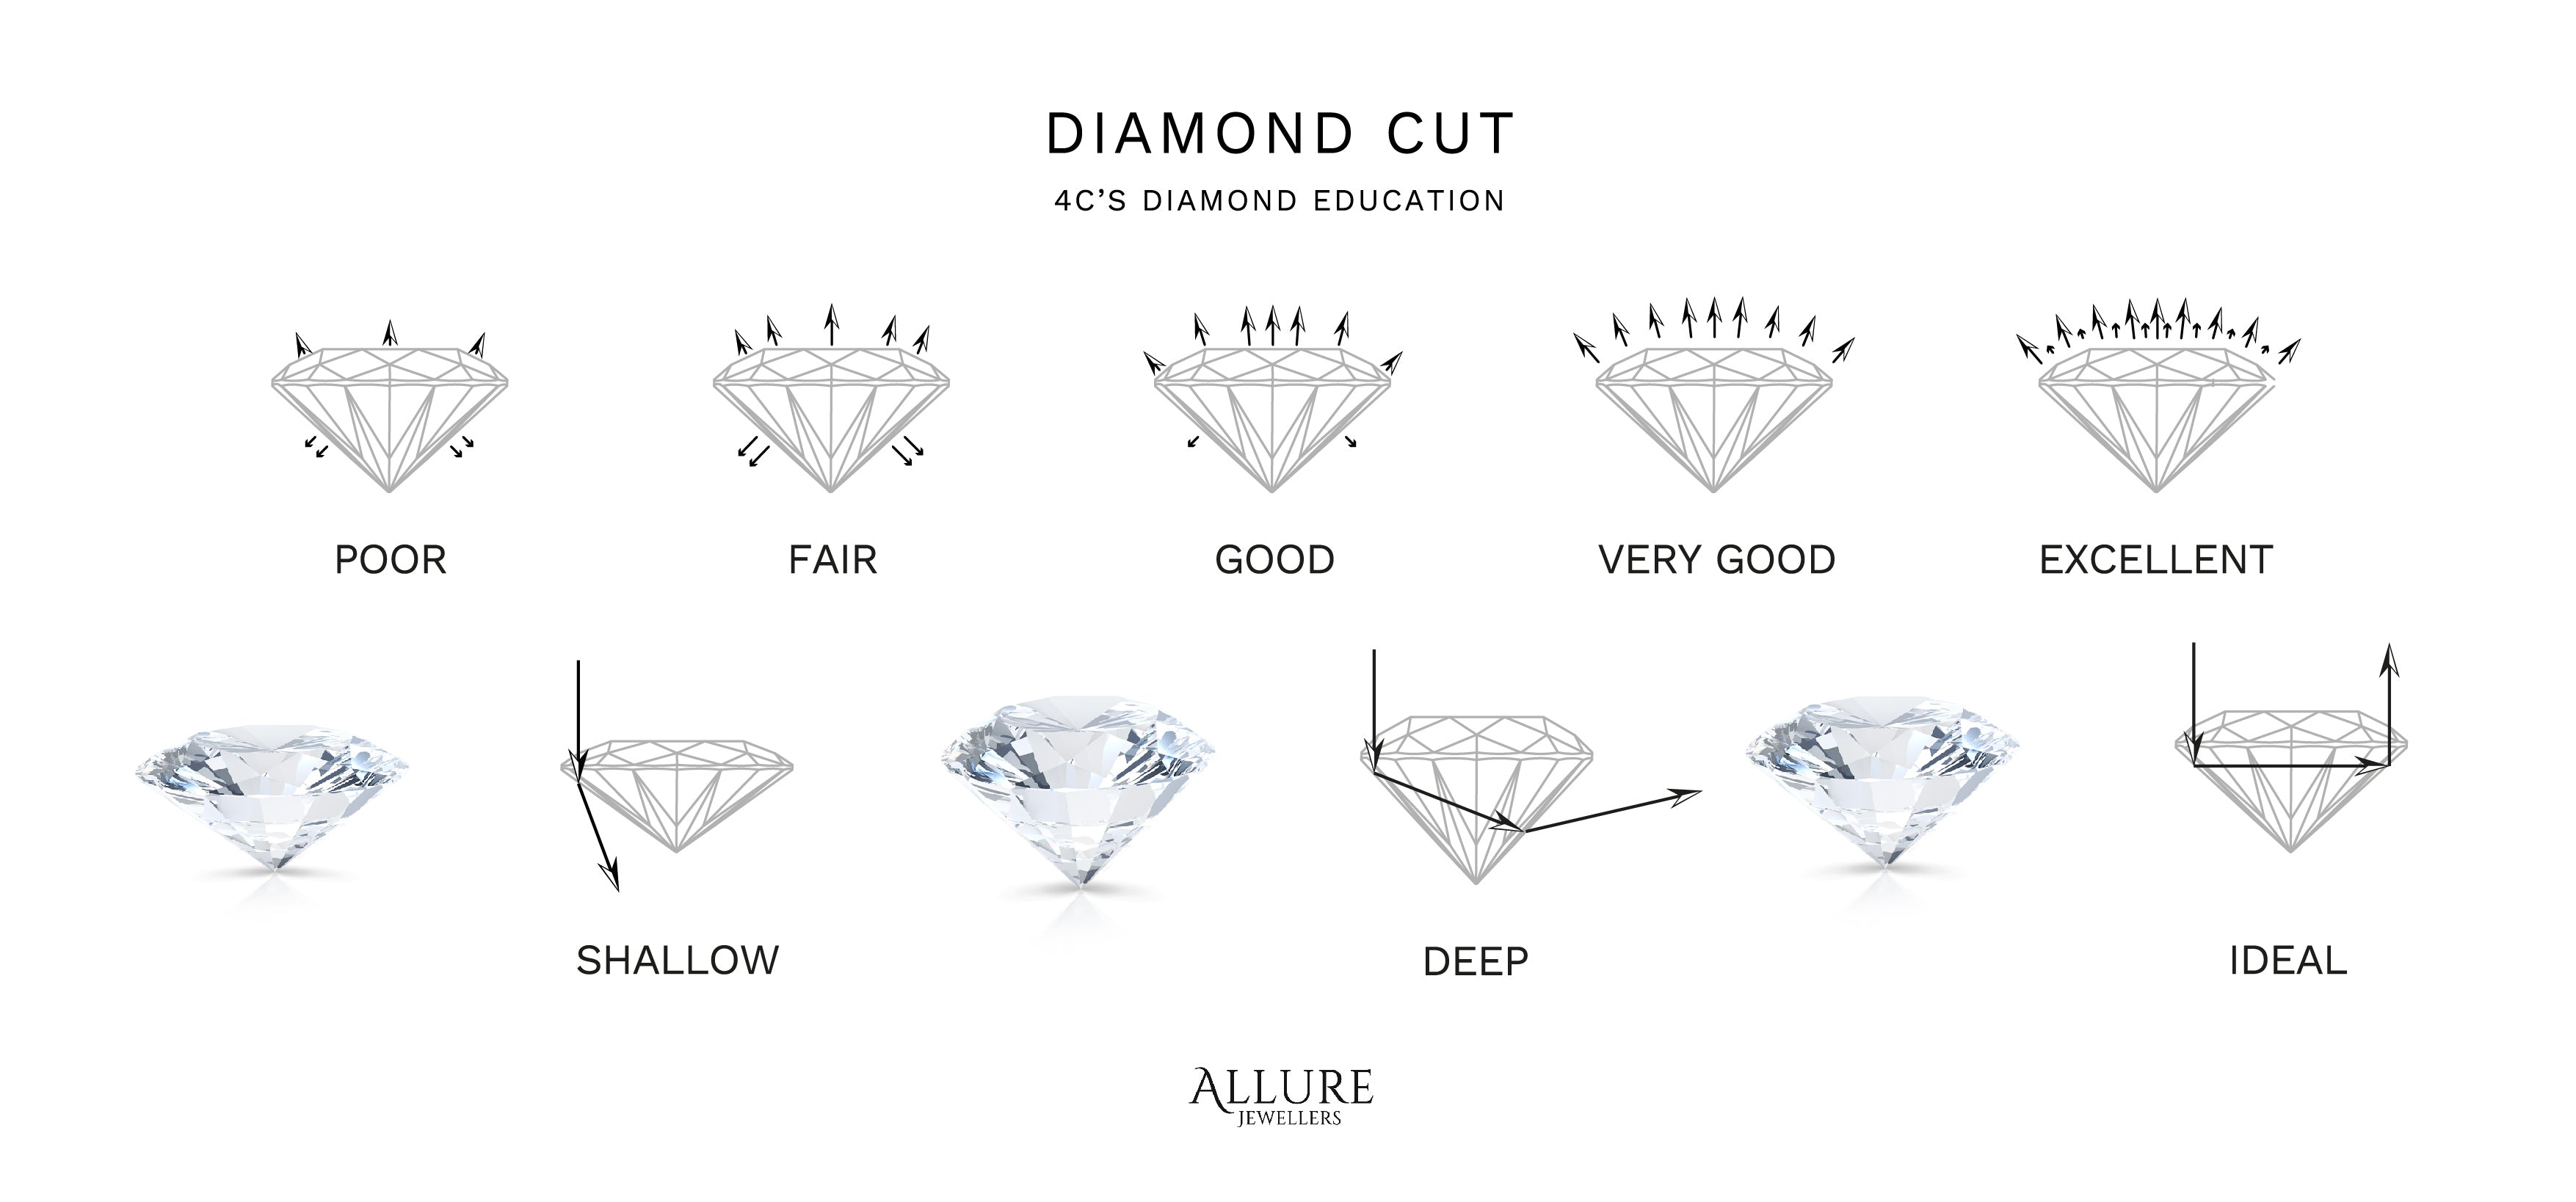 Allure Jewellers 4C's Education - Diamond Cut